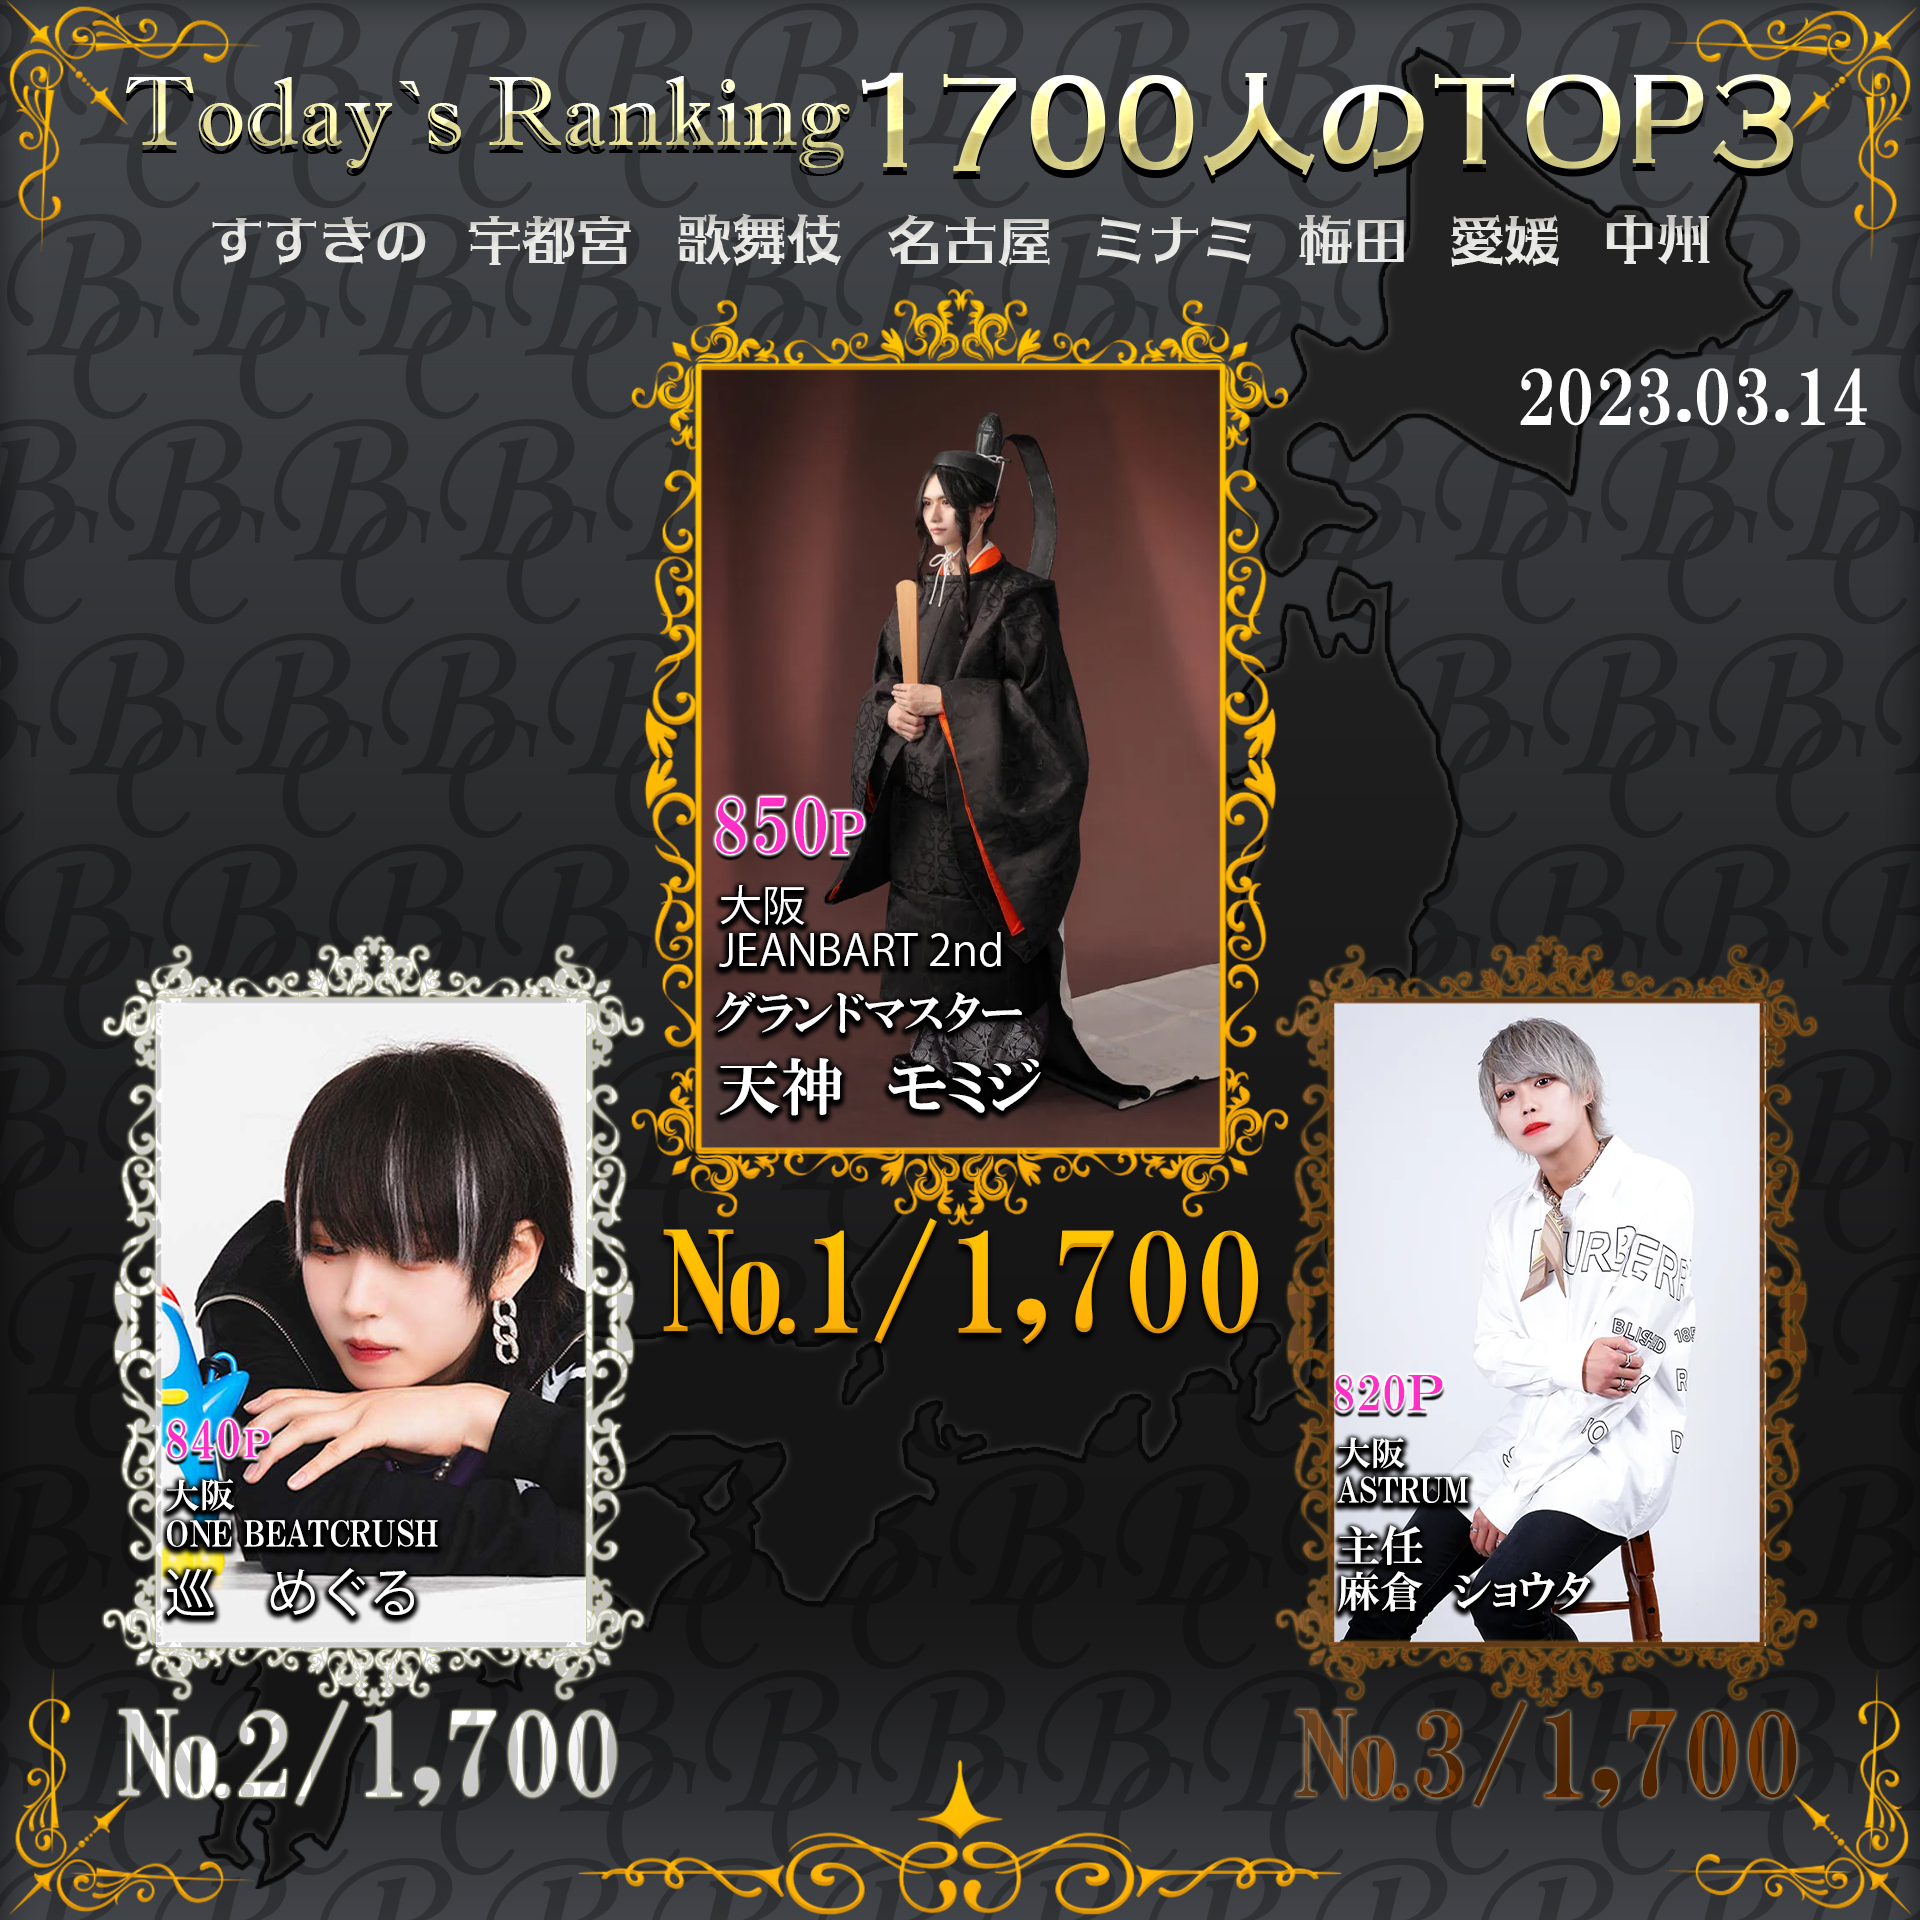 3/14 Today‘s Ranking